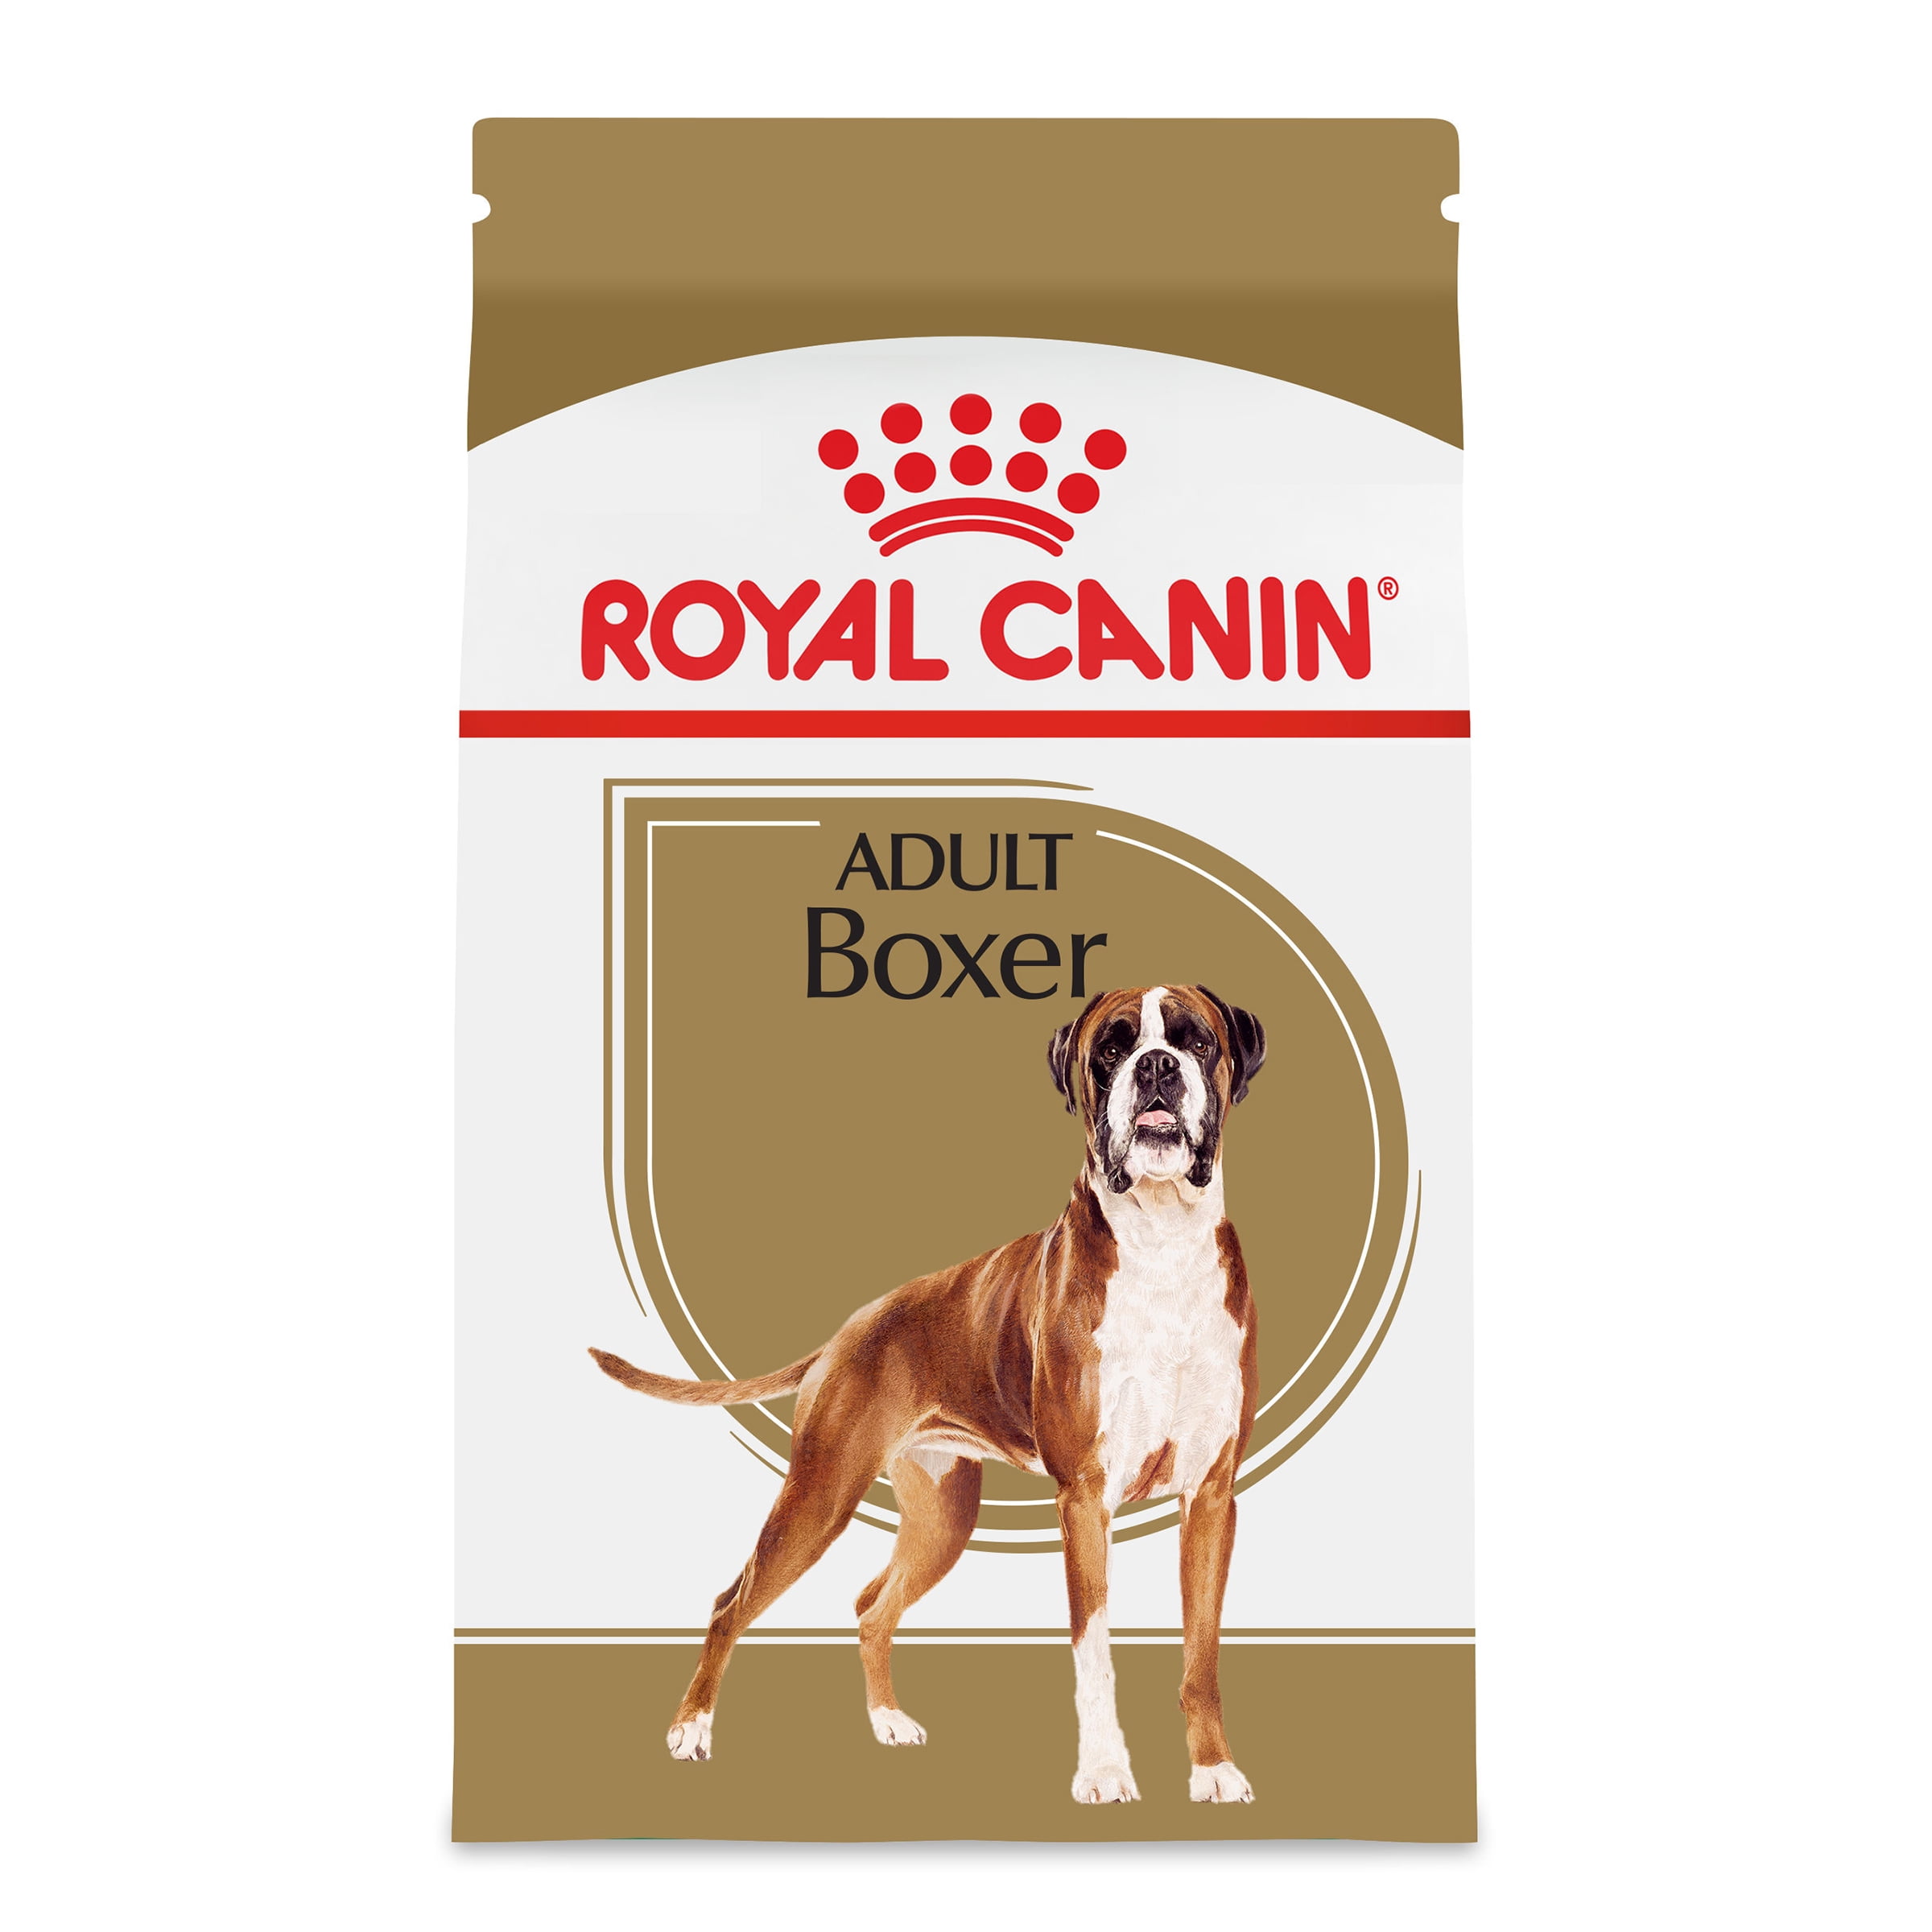 Royal Canin Boxer Adult Dry Dog Food, 30 lb - Walmart.com ...